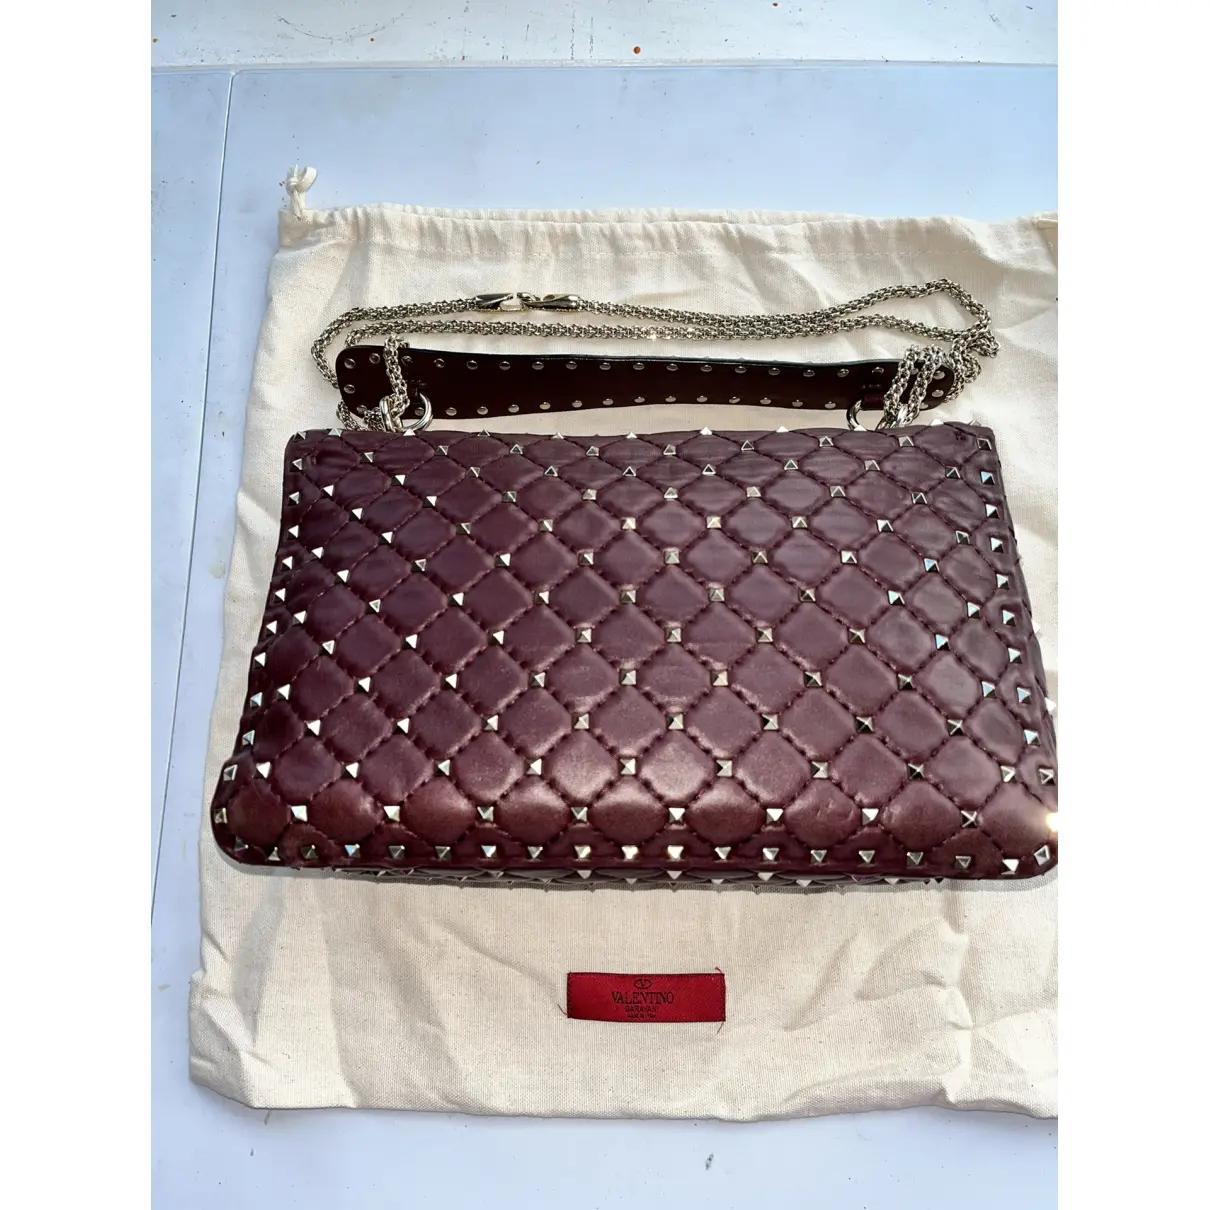 Buy Valentino Garavani Rockstud spike leather handbag online